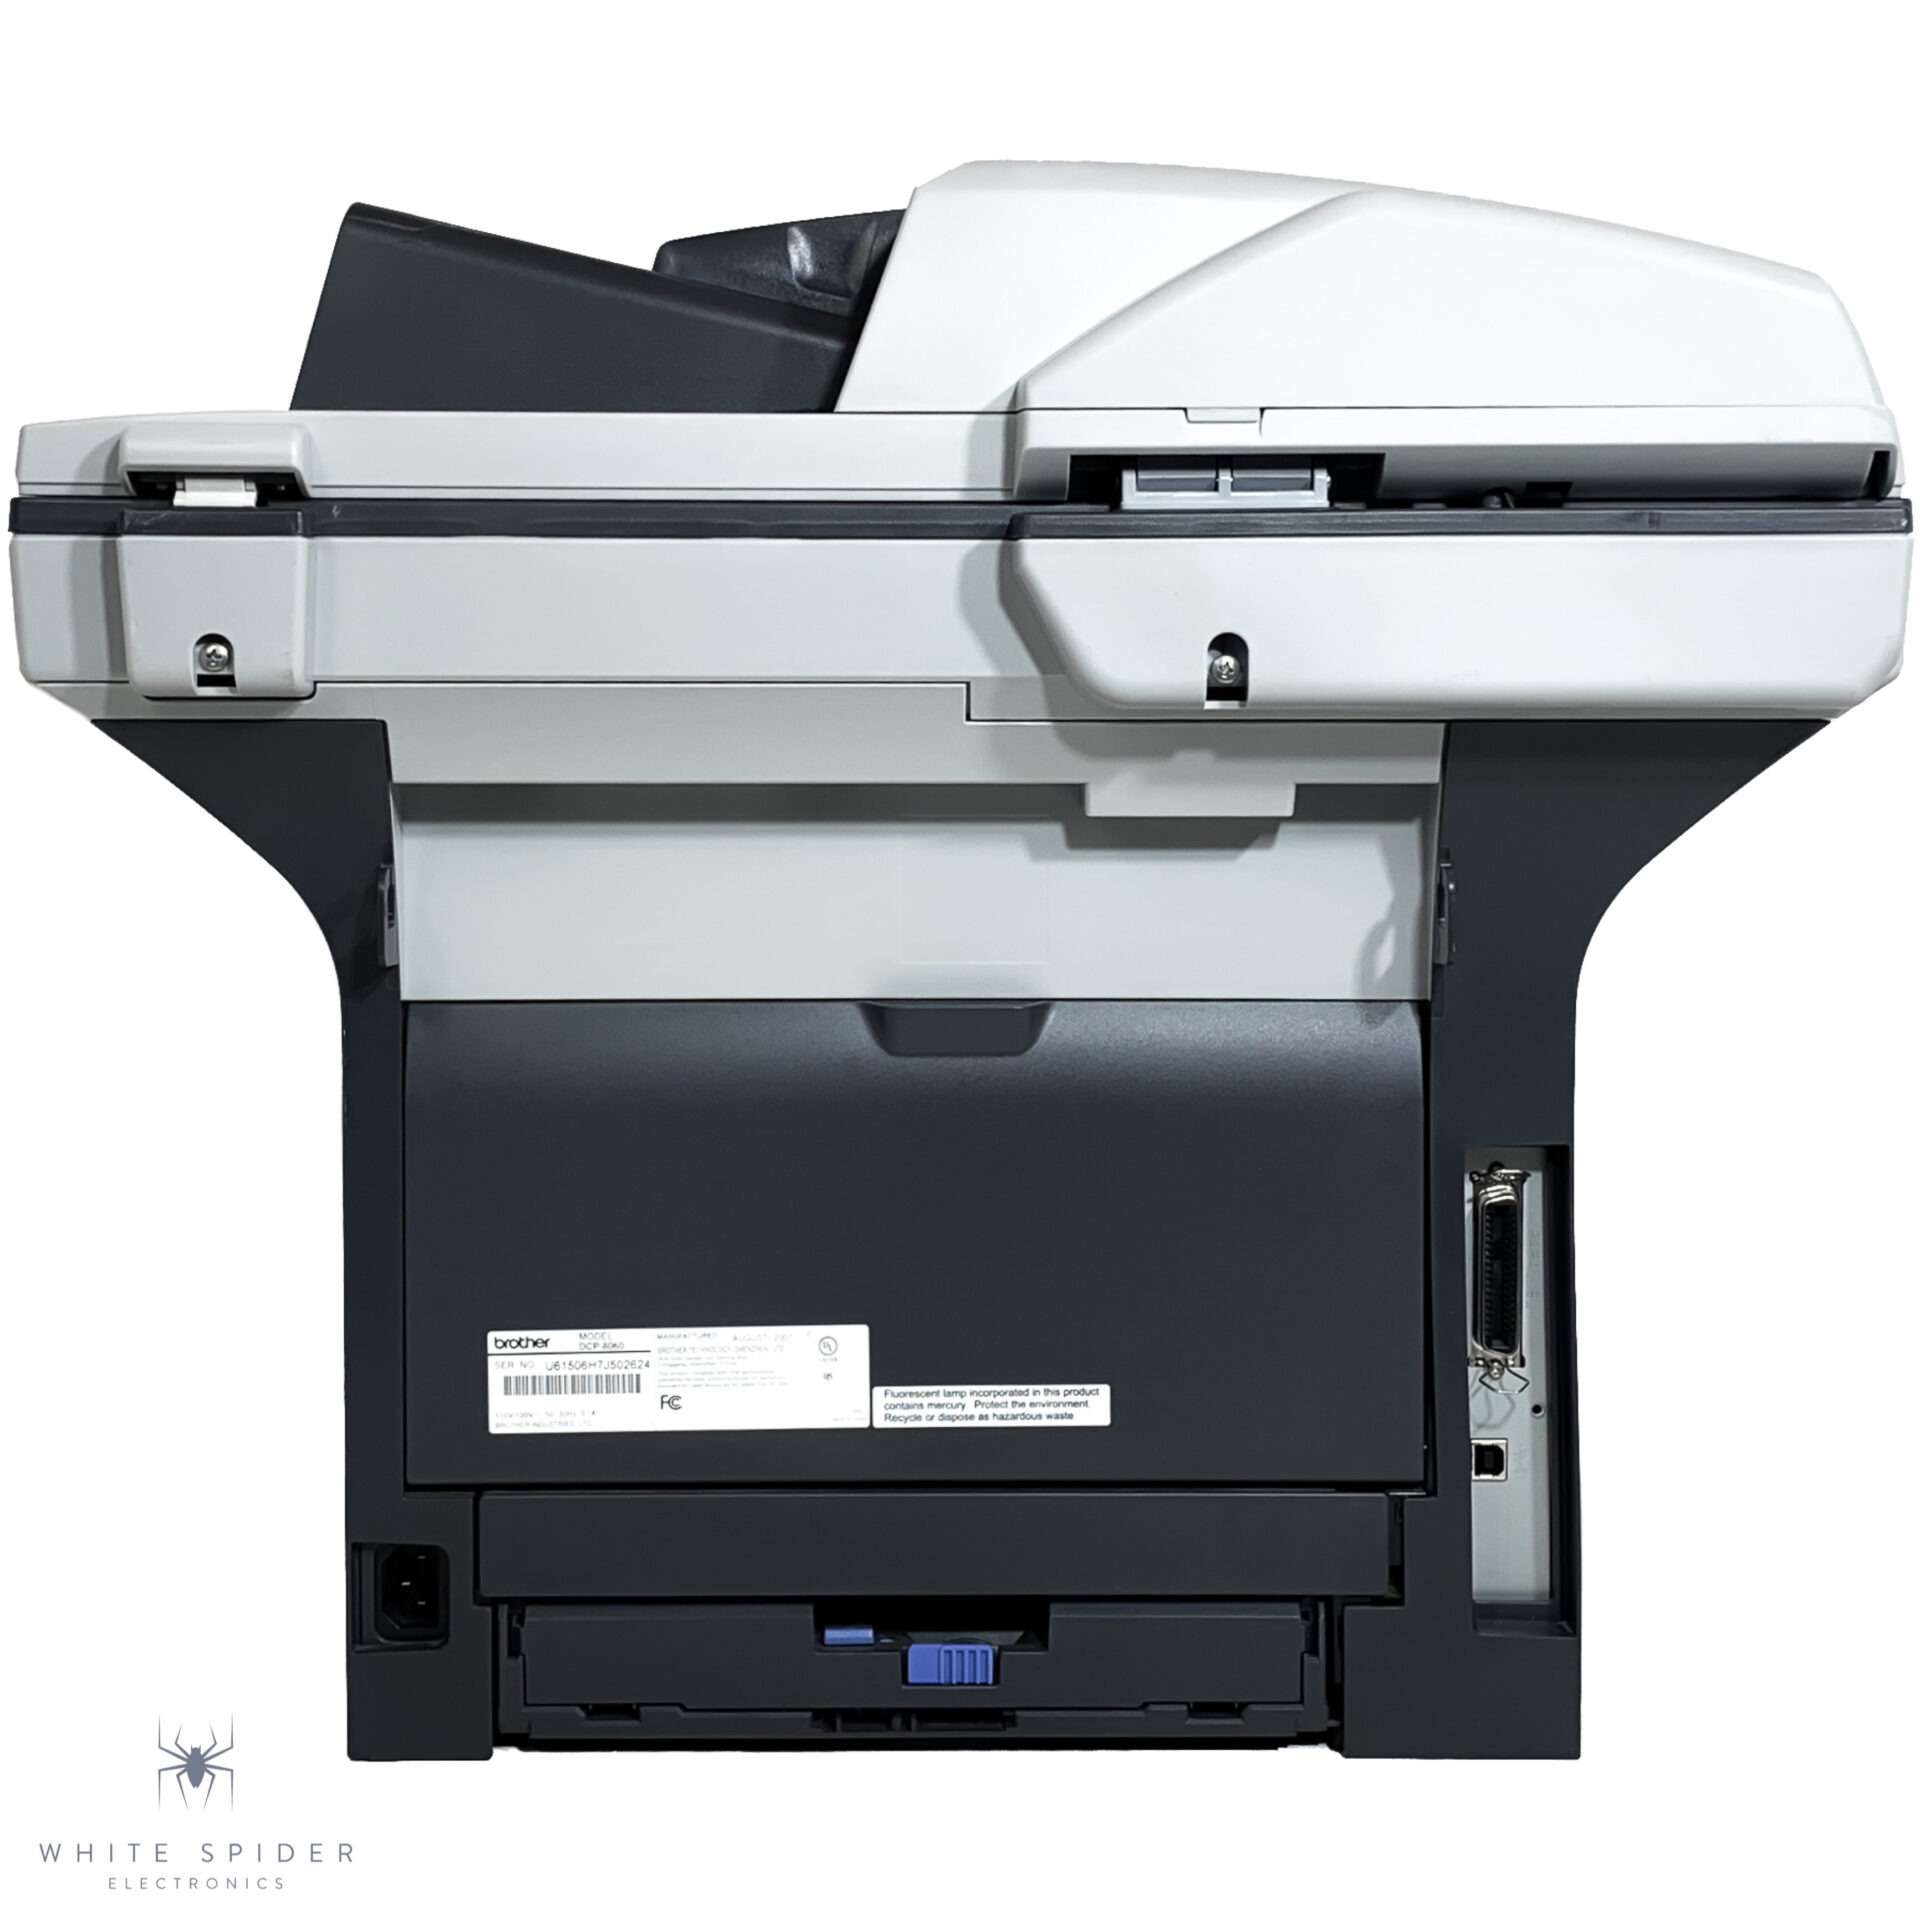 escribir Especificado Gran cantidad de Brother DCP-8060 All-In-One Laser Printer - White Spider Electronics